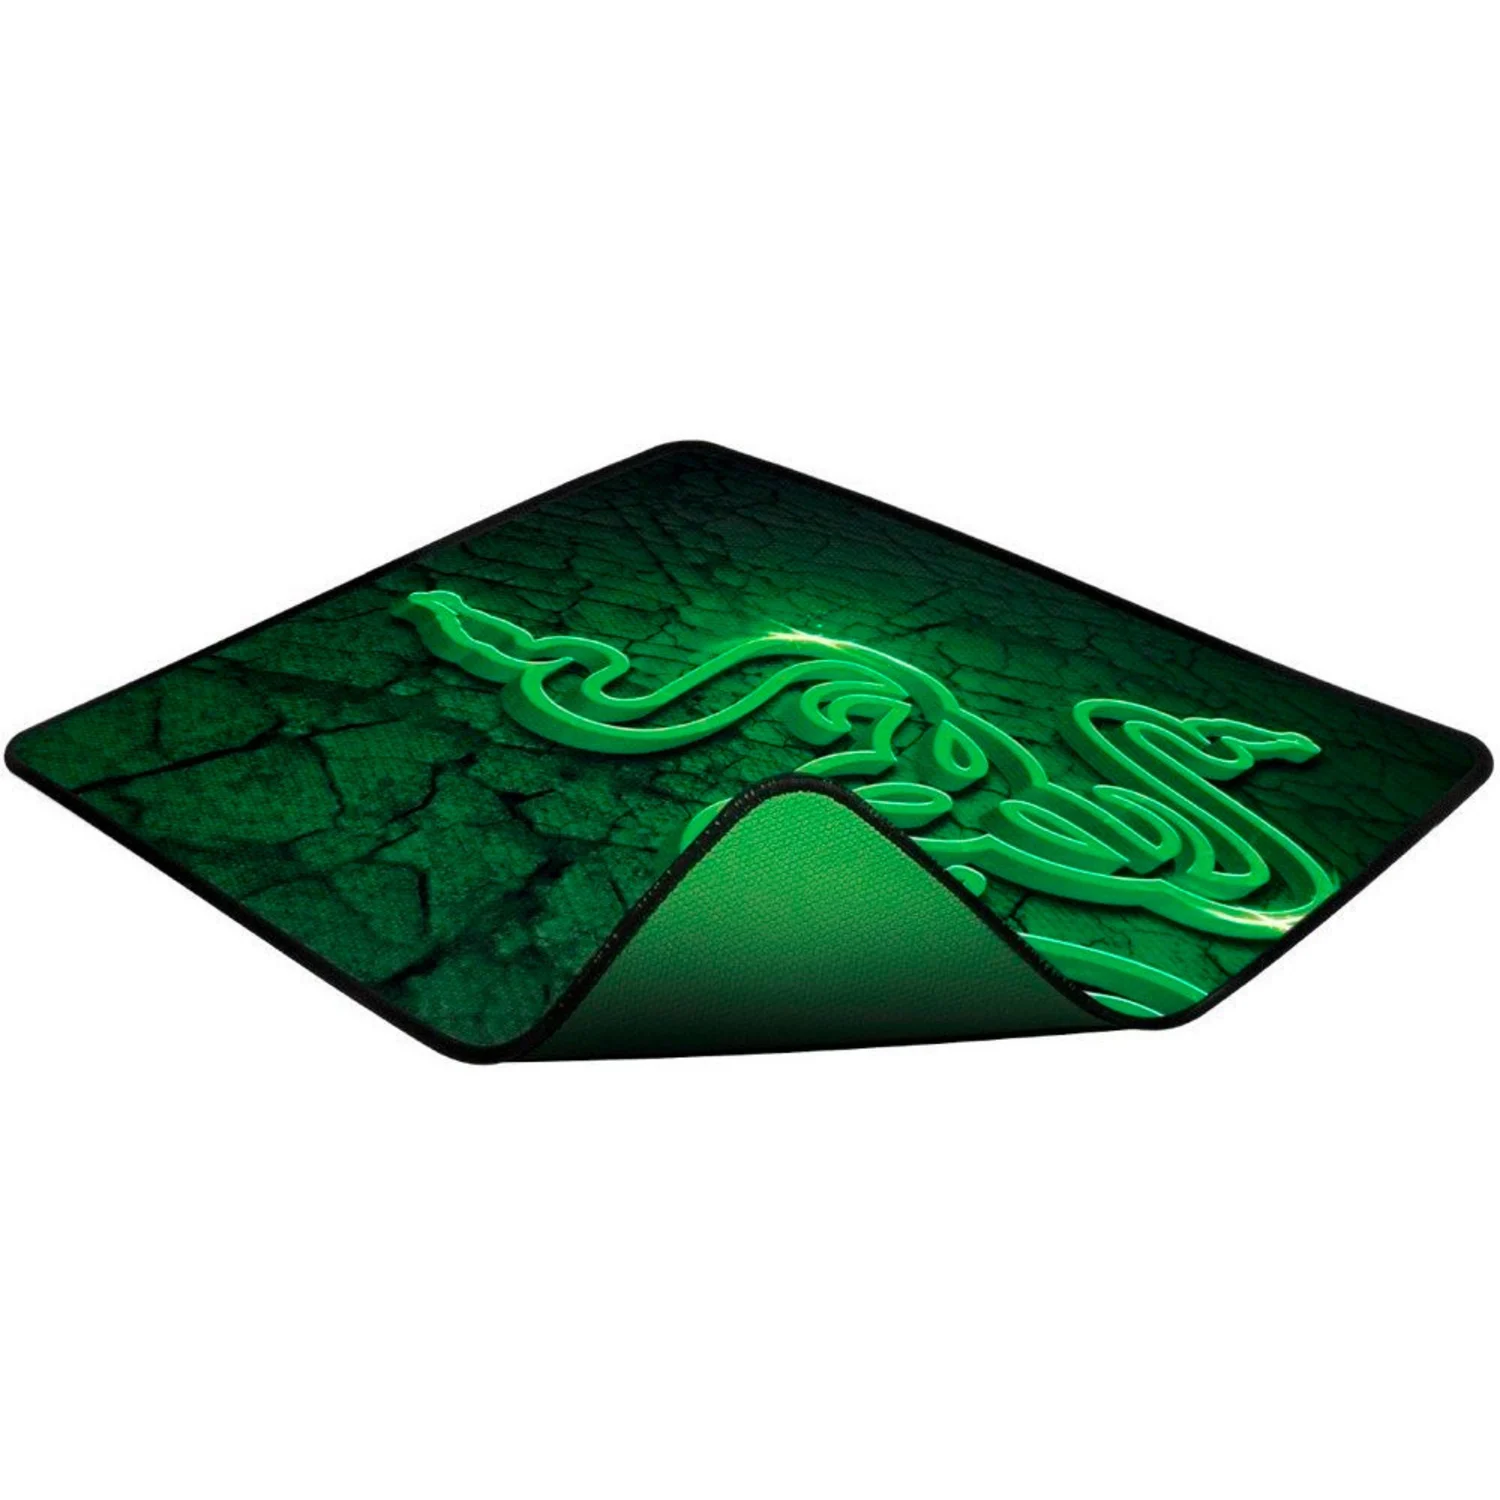 Mousepad Razer Goliathus Control Fissure Medio - Verde (01070600)